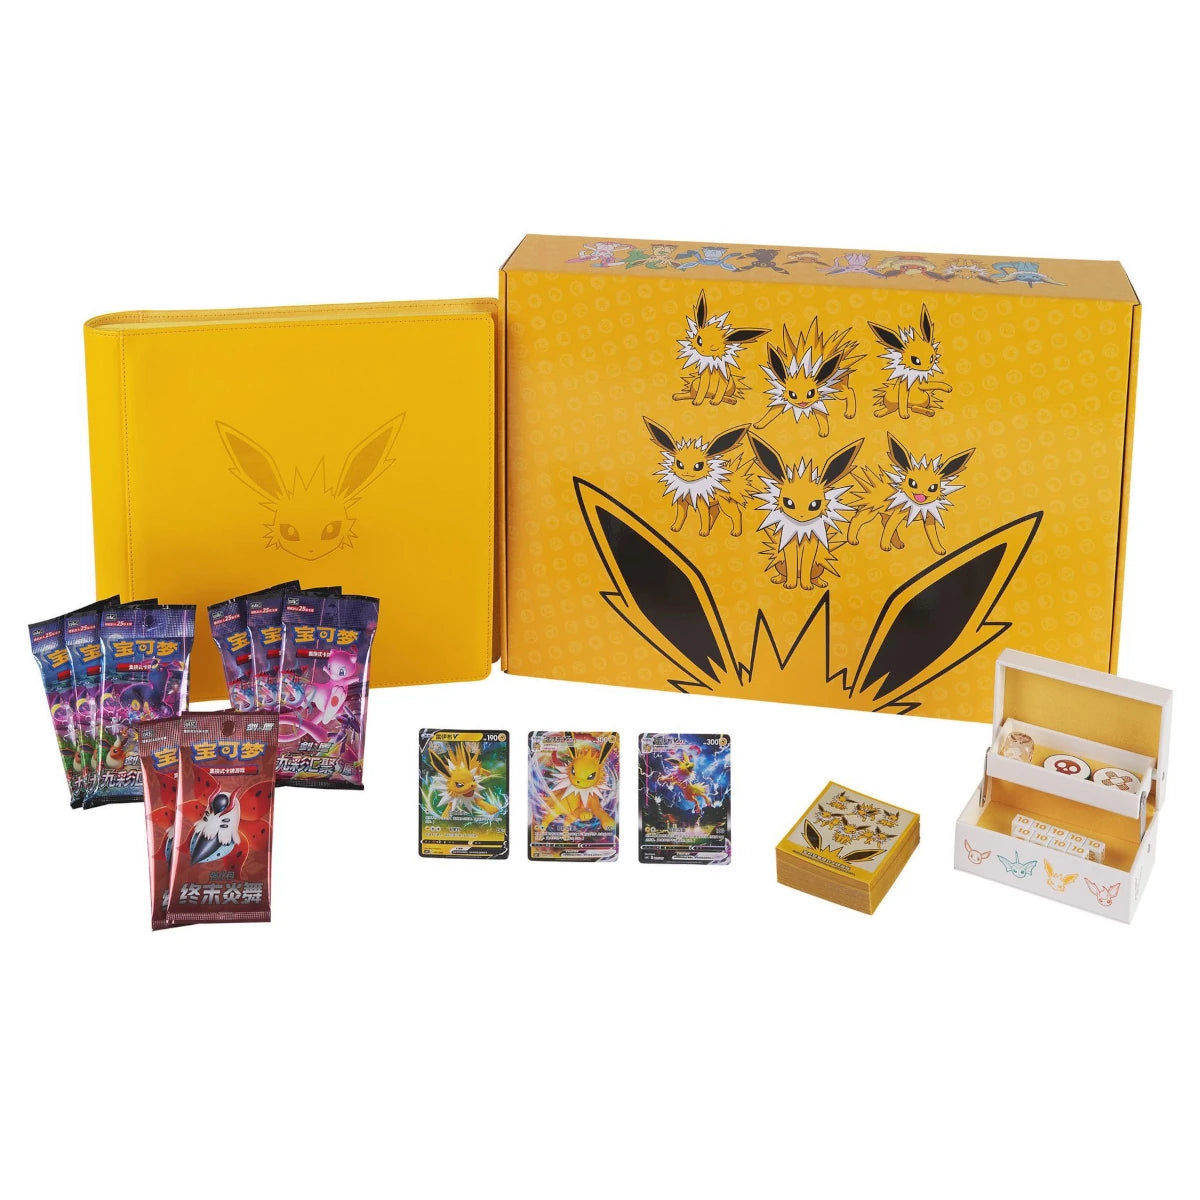 Eevee Advanced Gift Box: Jolteon [PRE-ORDER]